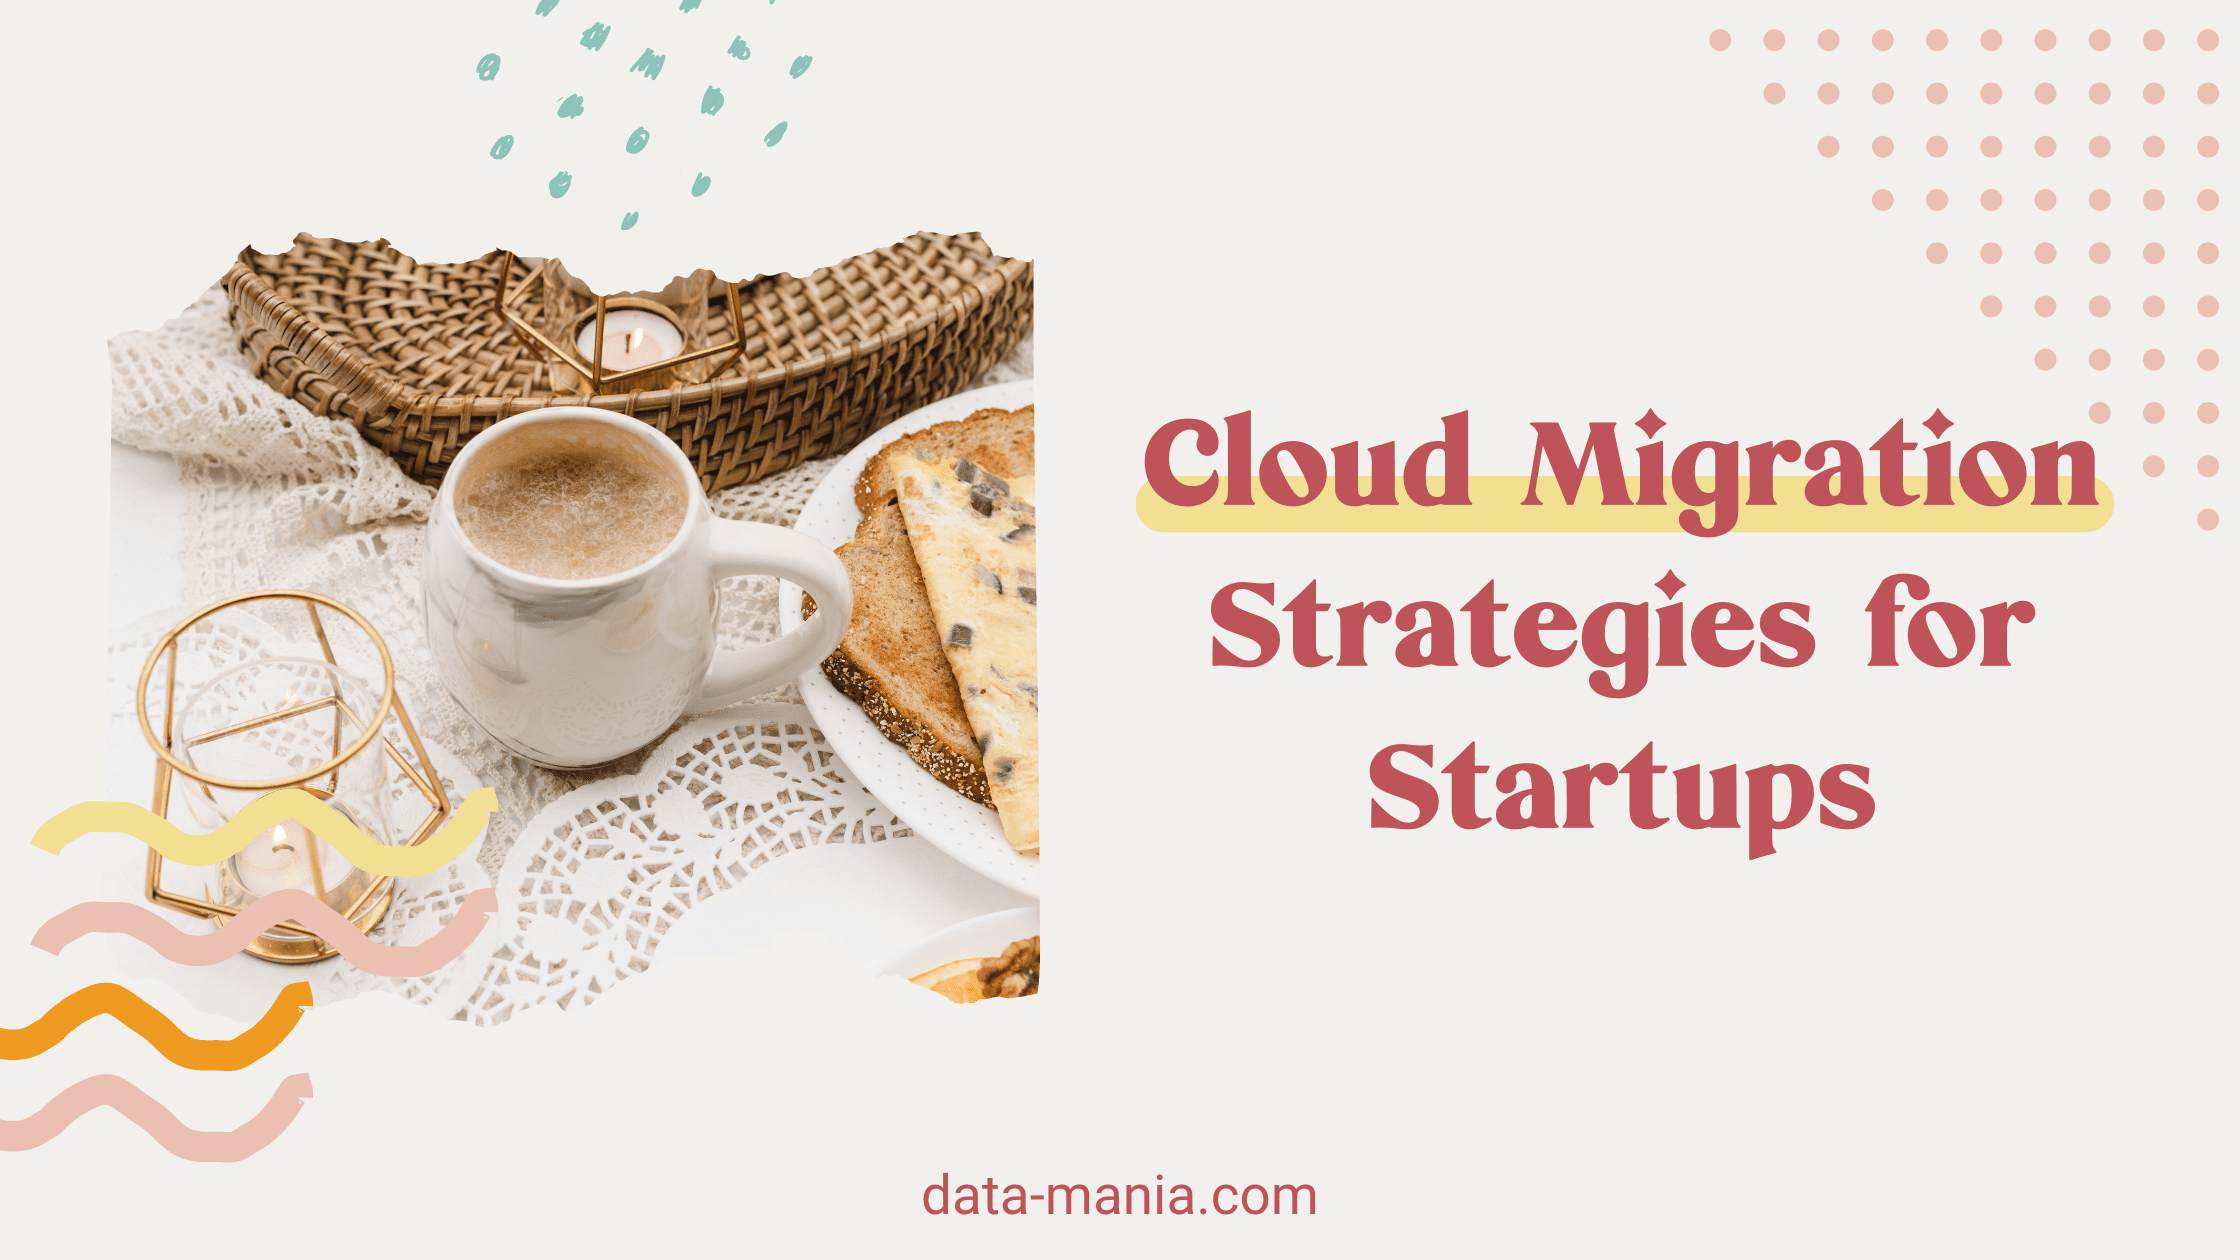 Cloud Migration Strategies for Startups